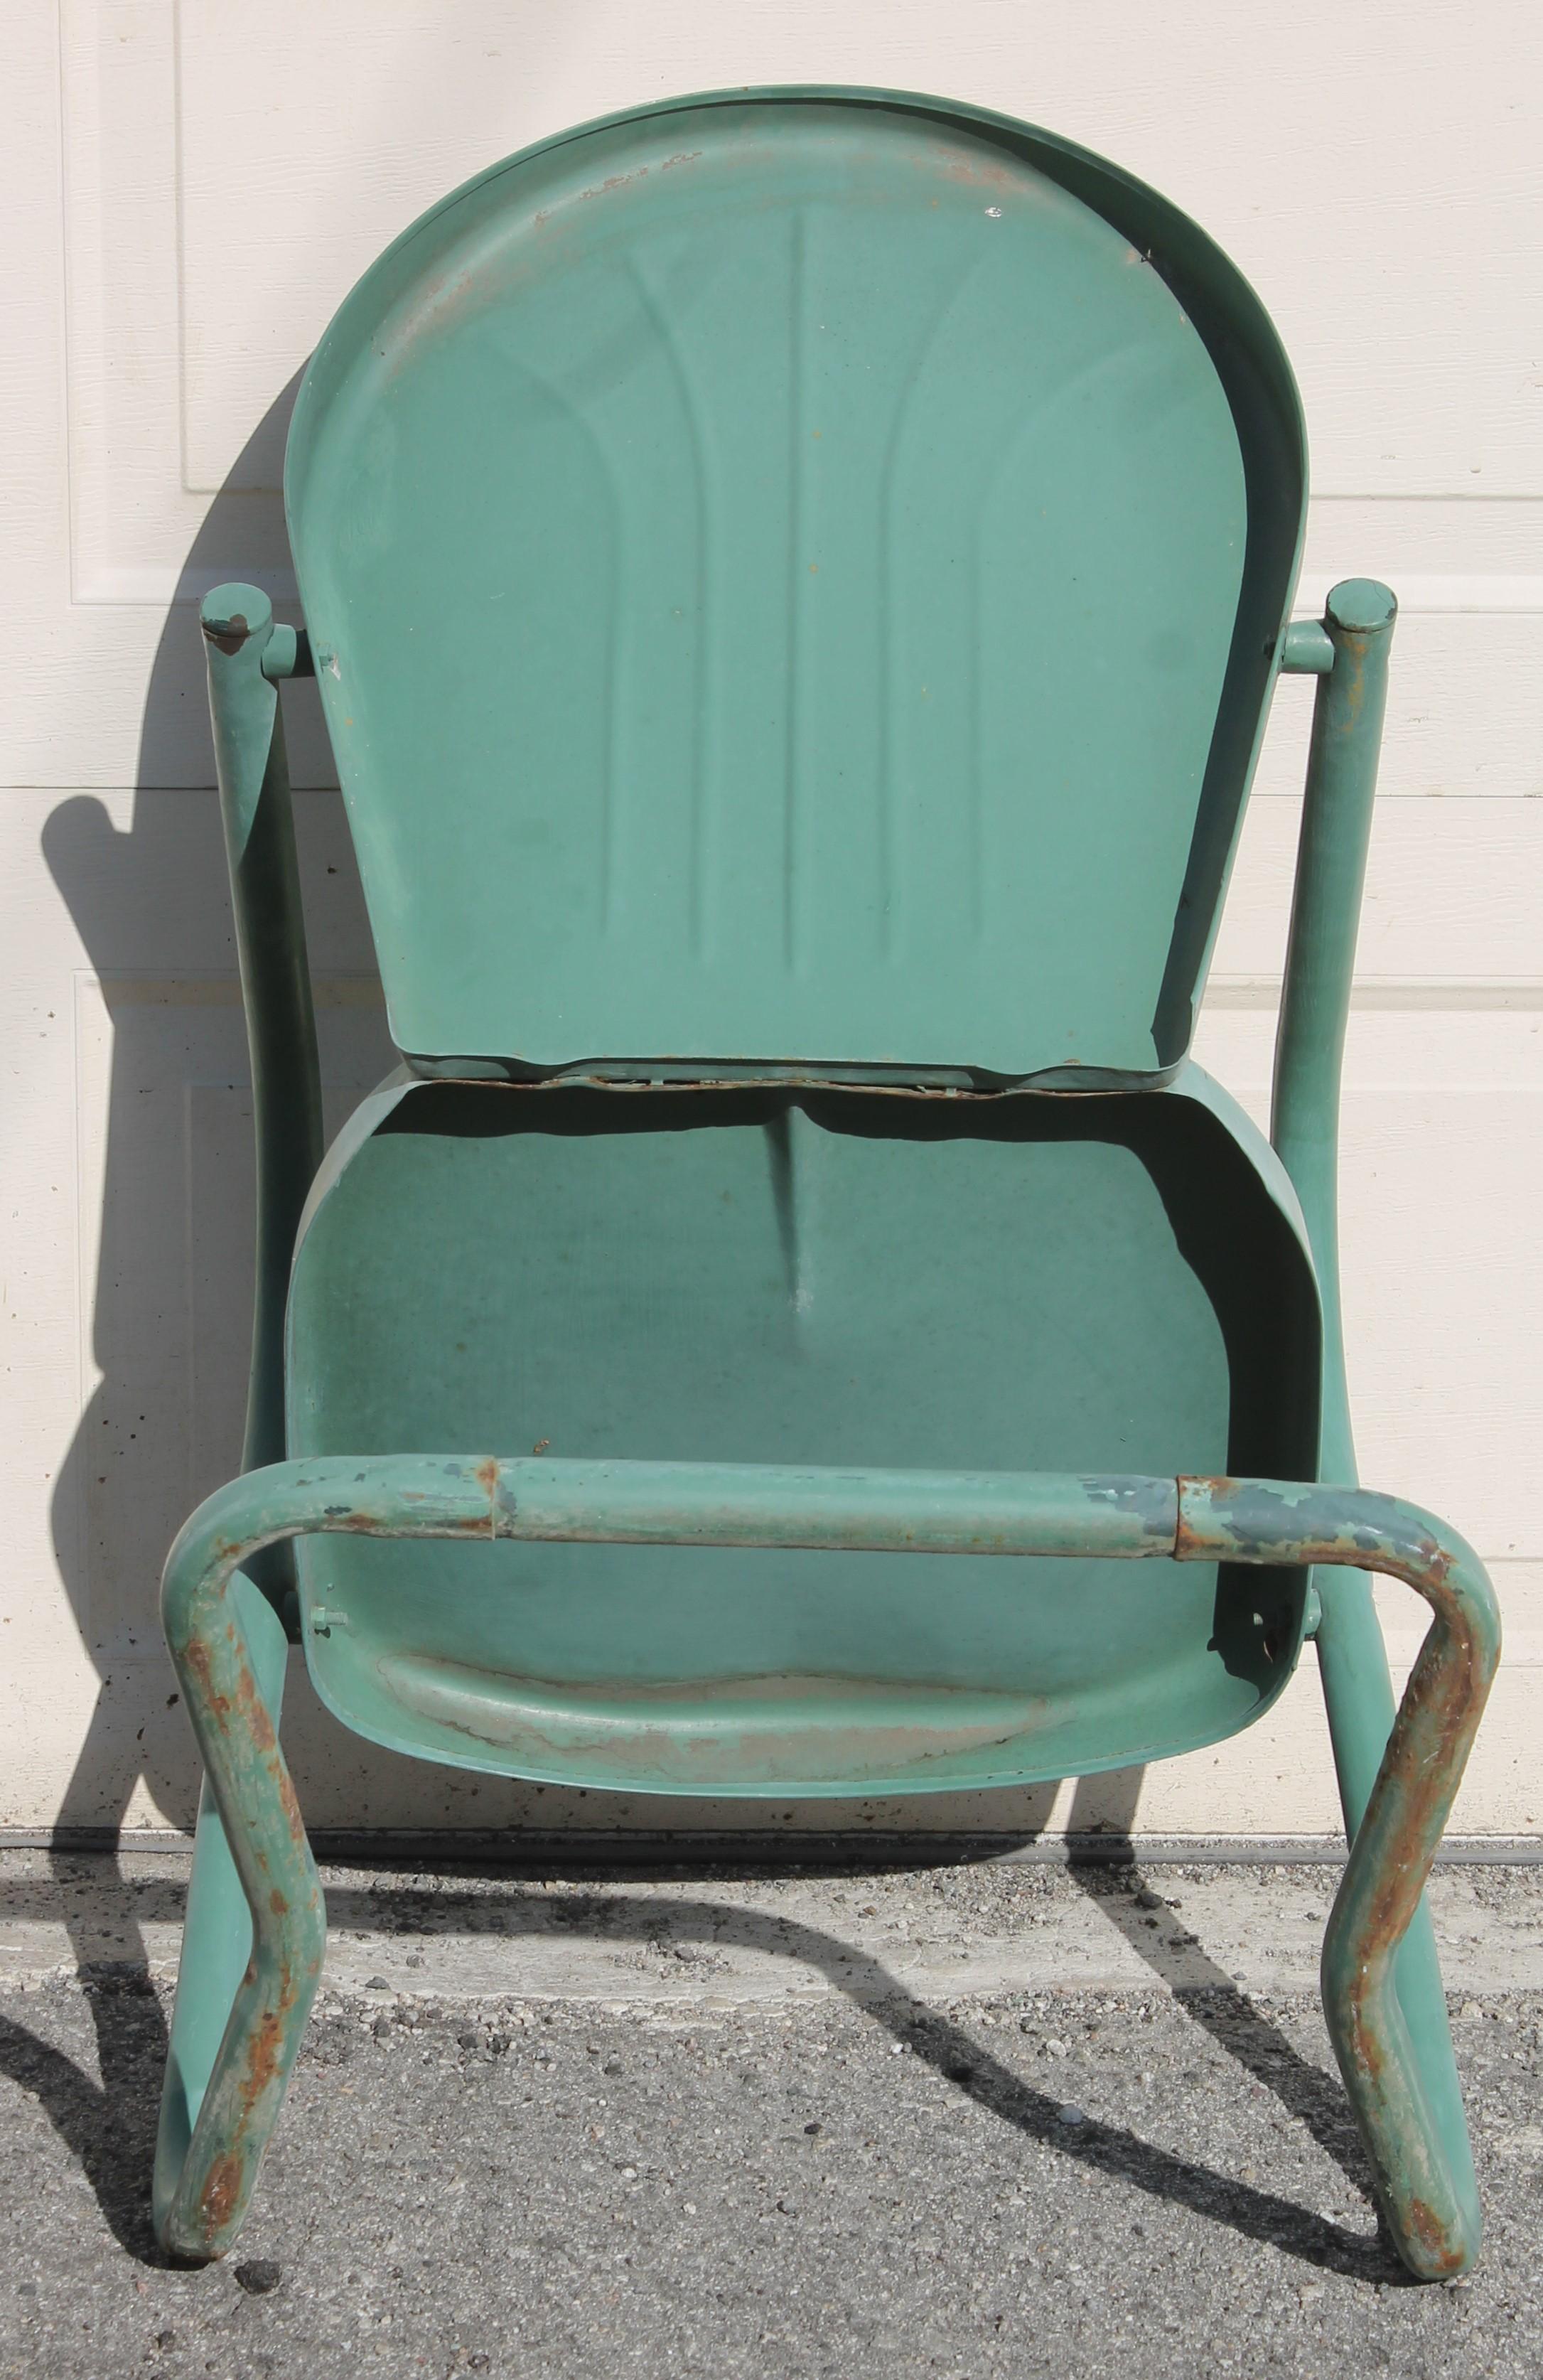 Outdoor Lawn/ Beach Metal Chairs in Sea Foam Green, 4 2